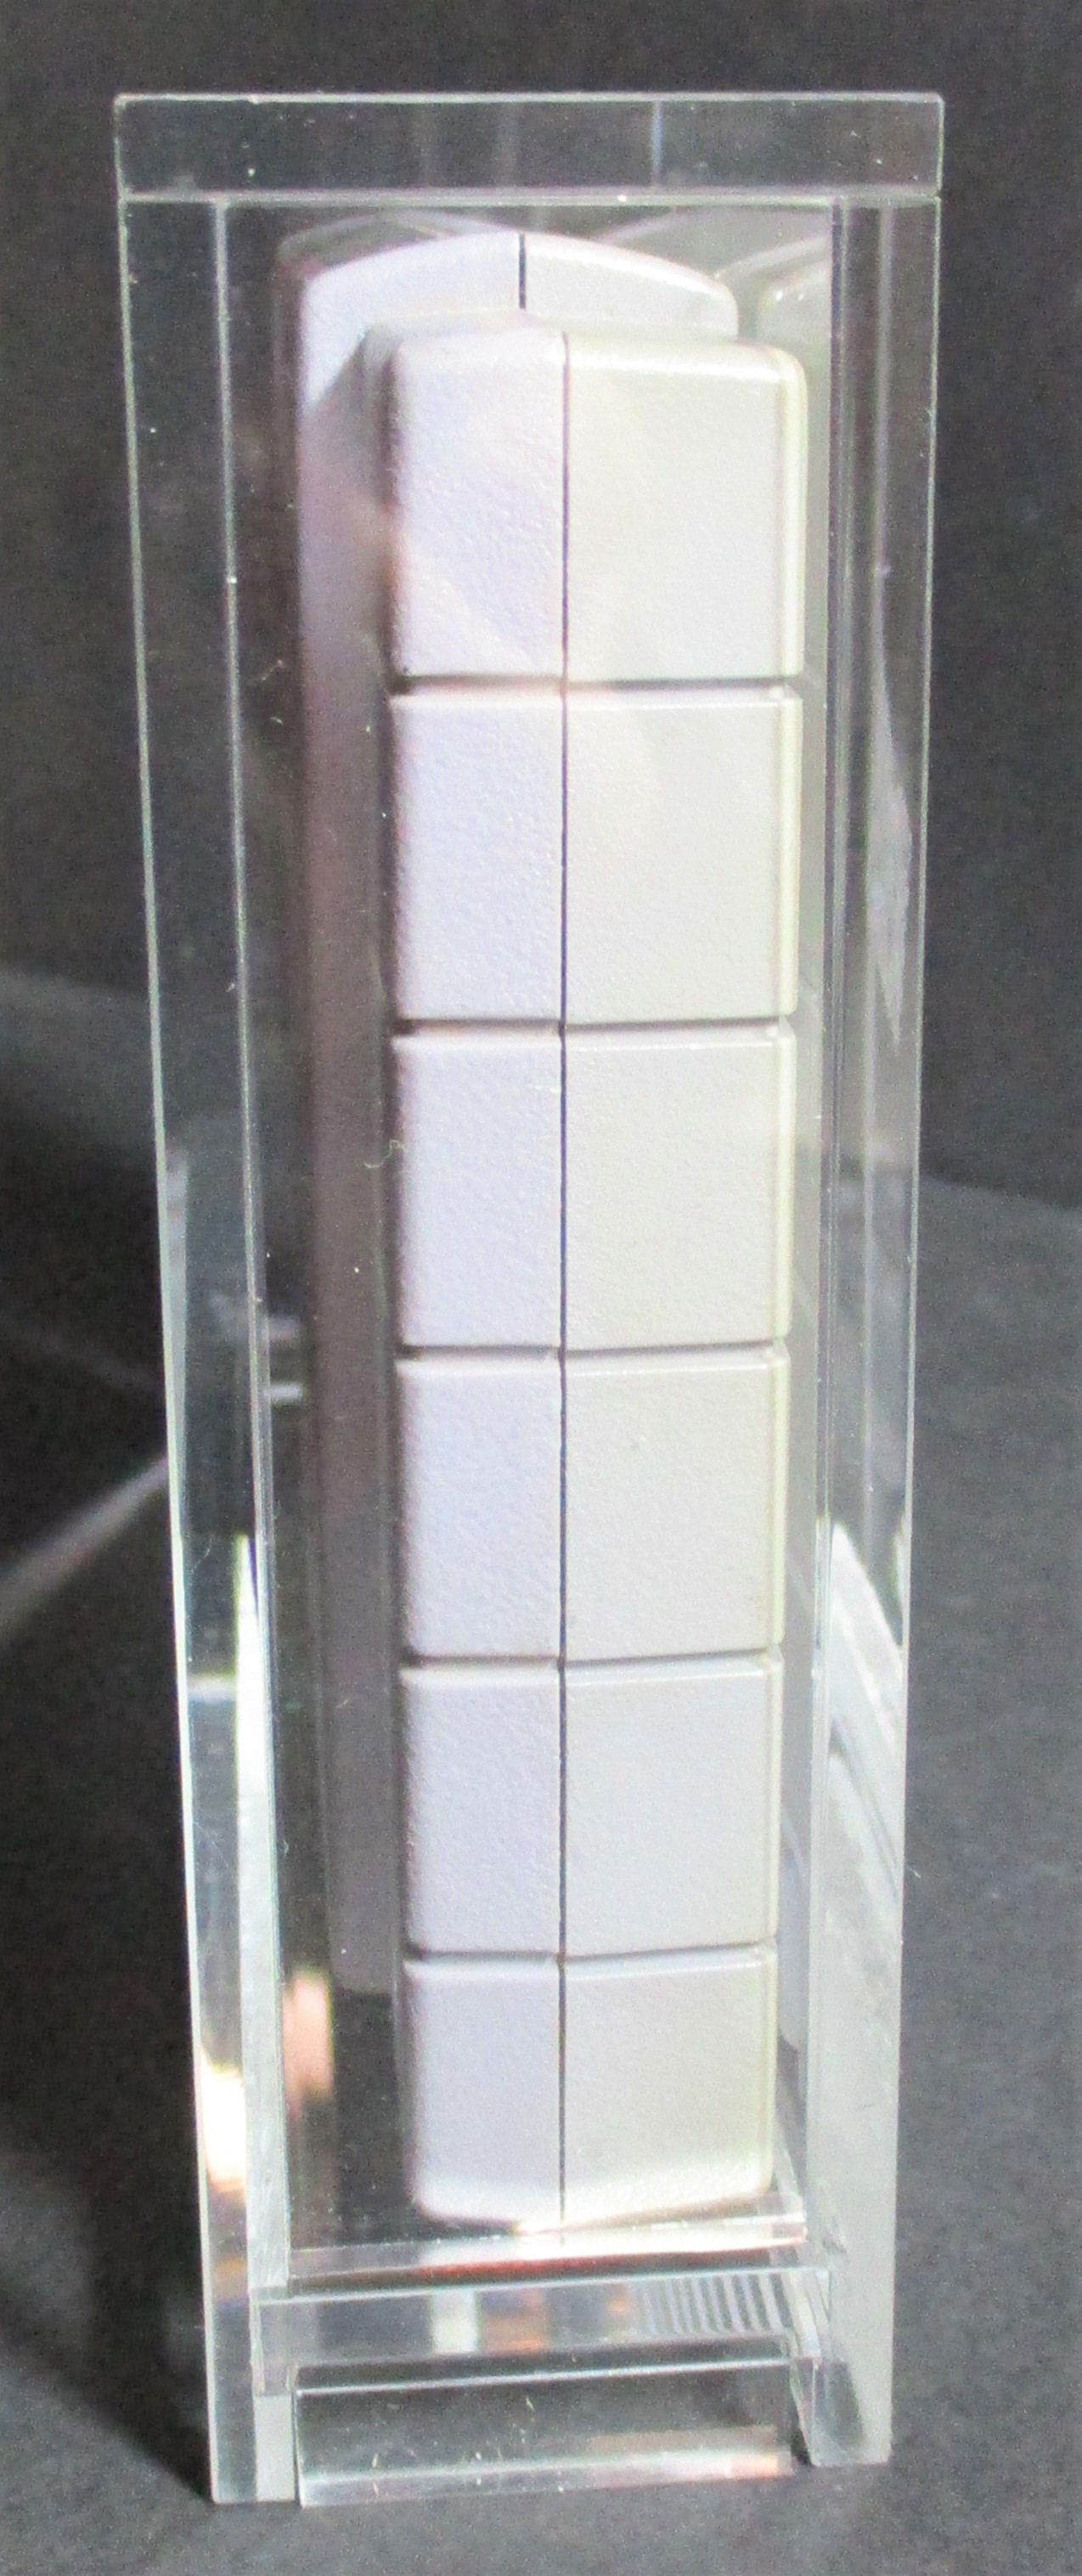 SNES Loose Cartridge Acrylic Display Guard (60033)